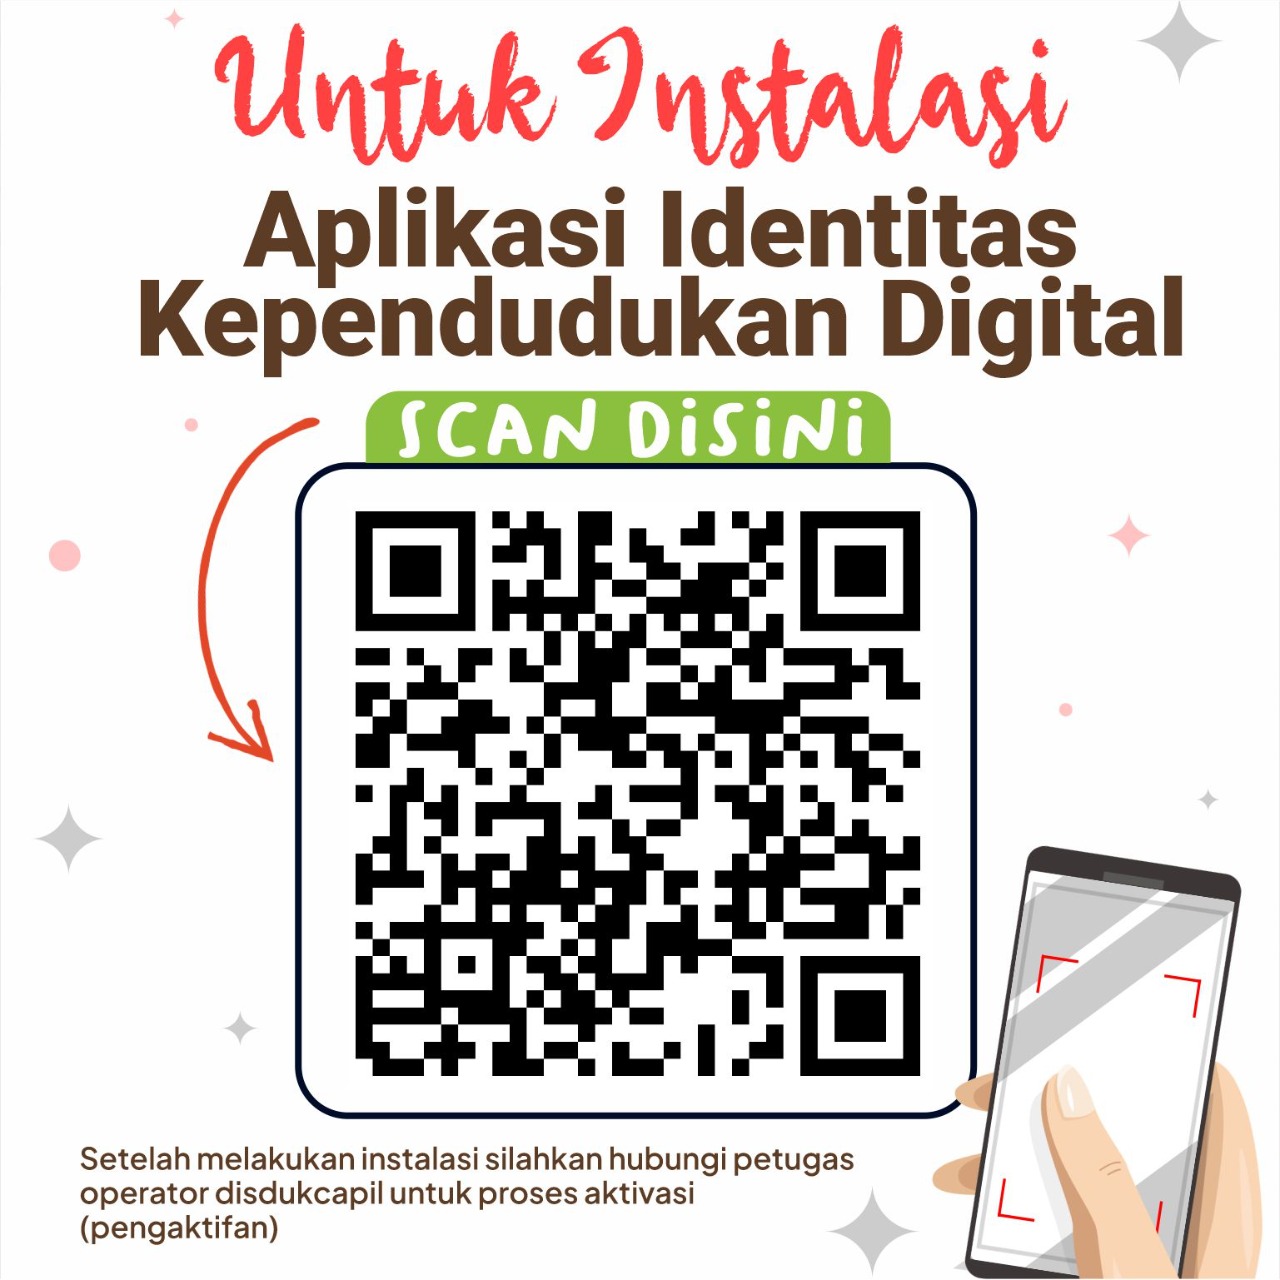 Aplikasi identitas Kependudukan Digital